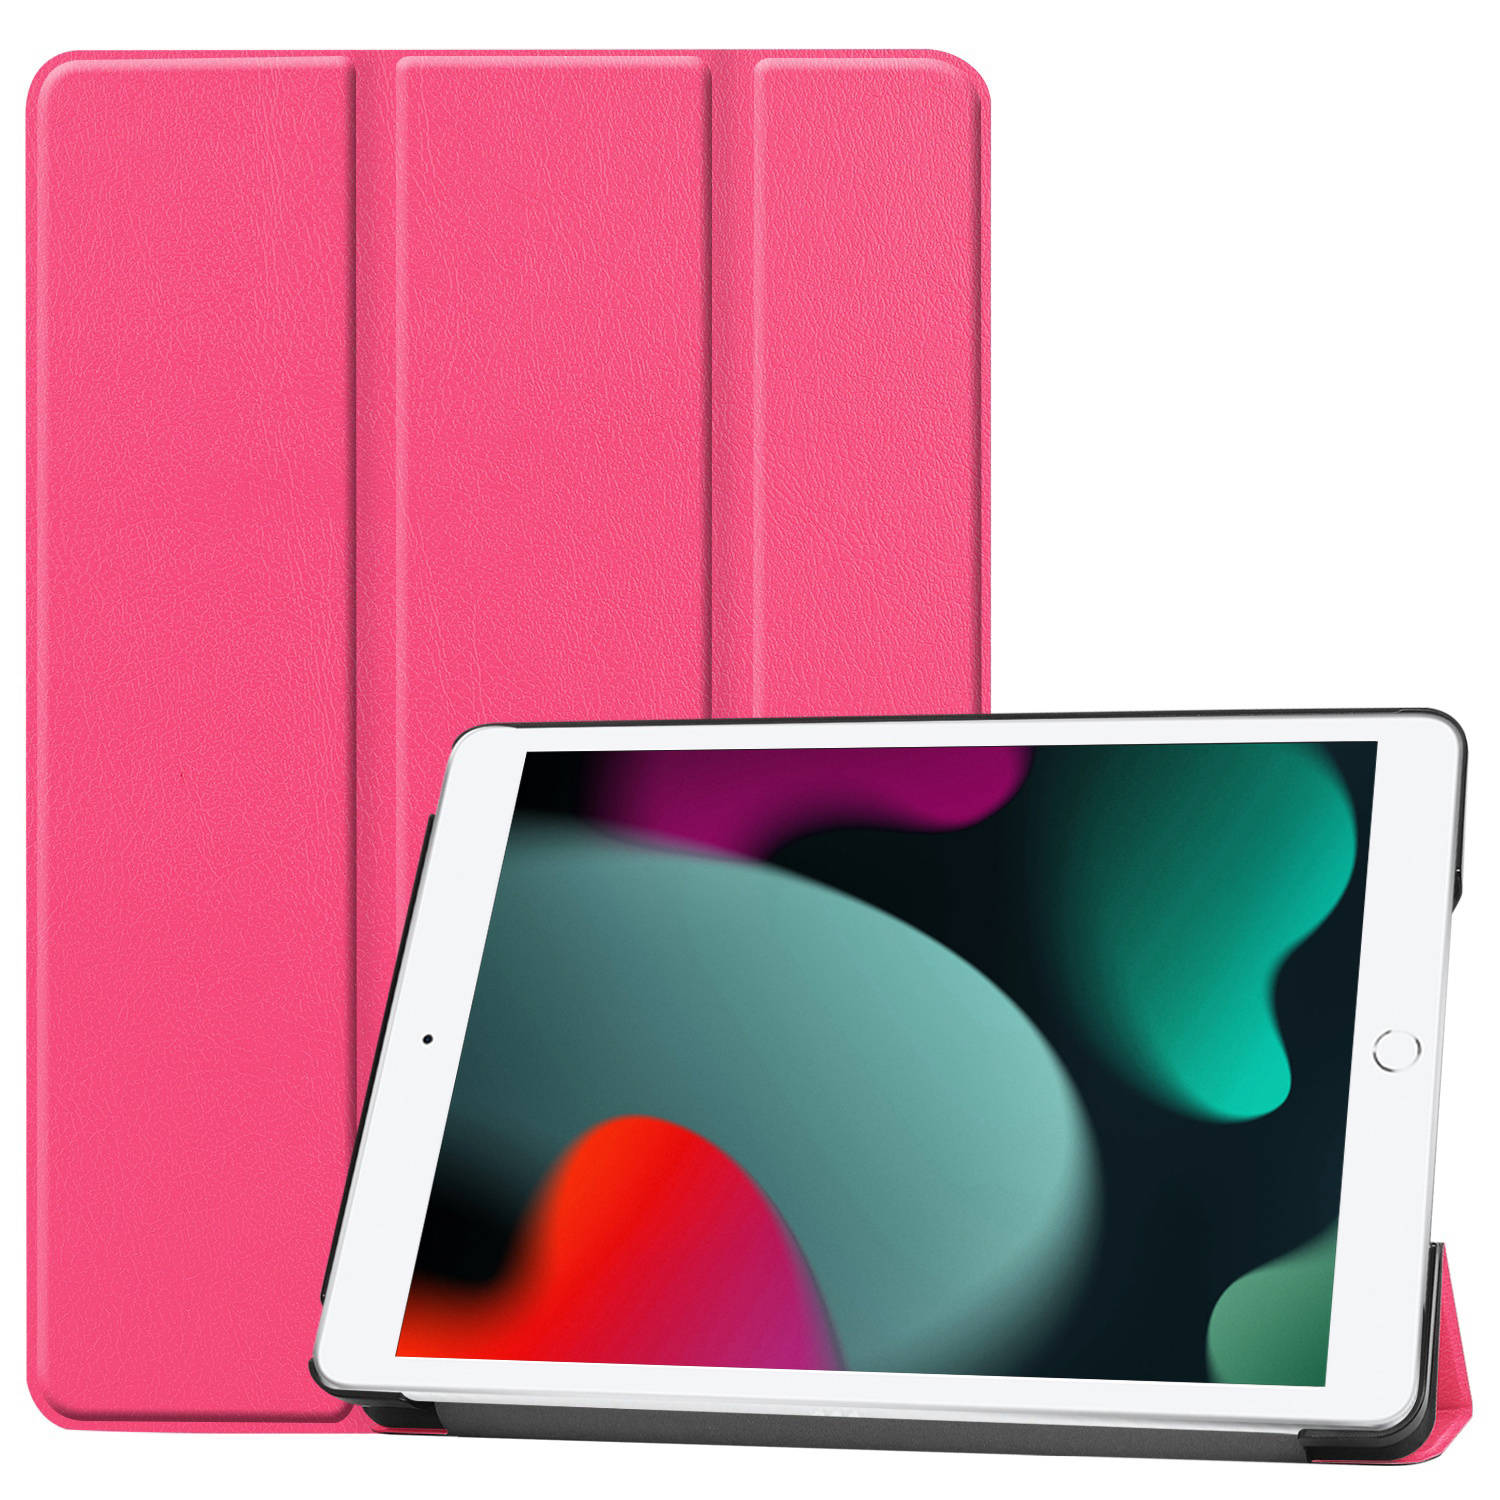 Basey iPad 10.2 2019 Hoes Book Case Hoesje - iPad 10.2 2019 Hoesje Hard Cover Case Hoes - Roze